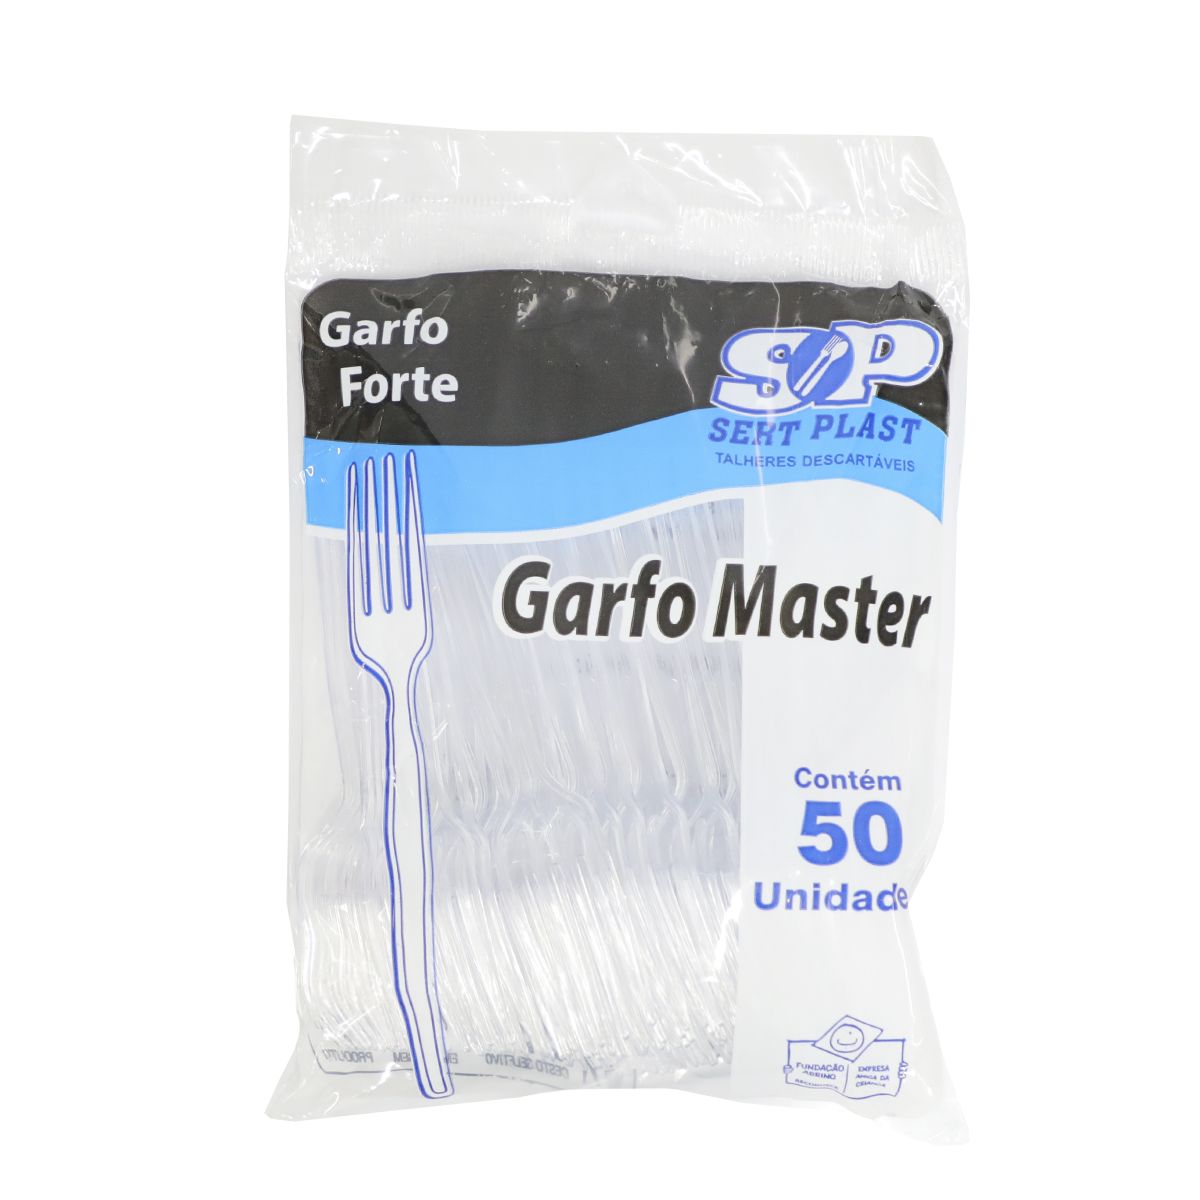 Garfo Descartável Sert Plast Master Crital 50 Unidades